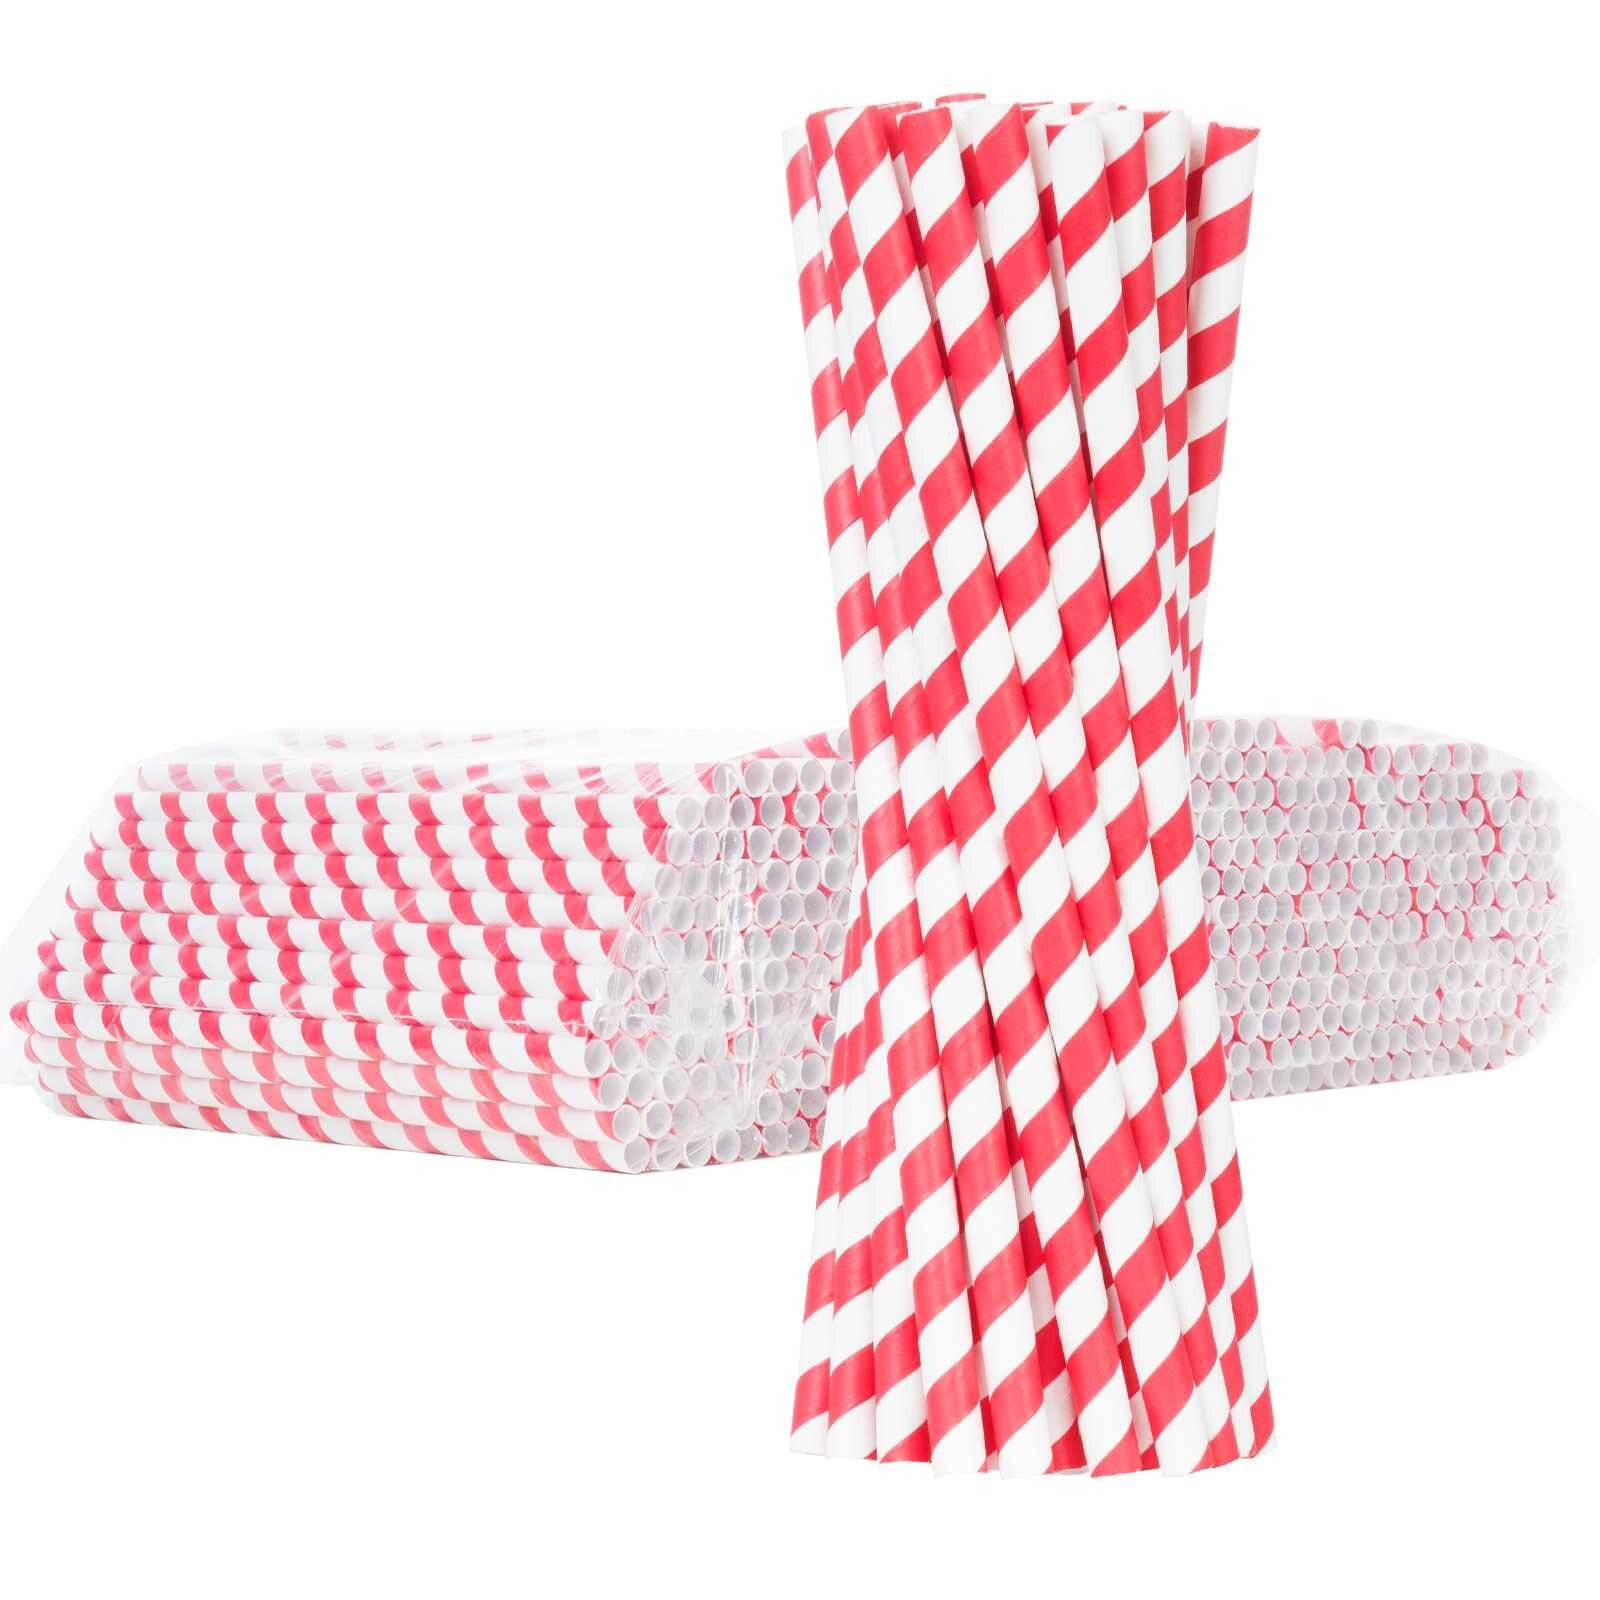 Paper straws BIO ecological PAPER STRAWS 6 / 205mm - white-red 500 pcs.